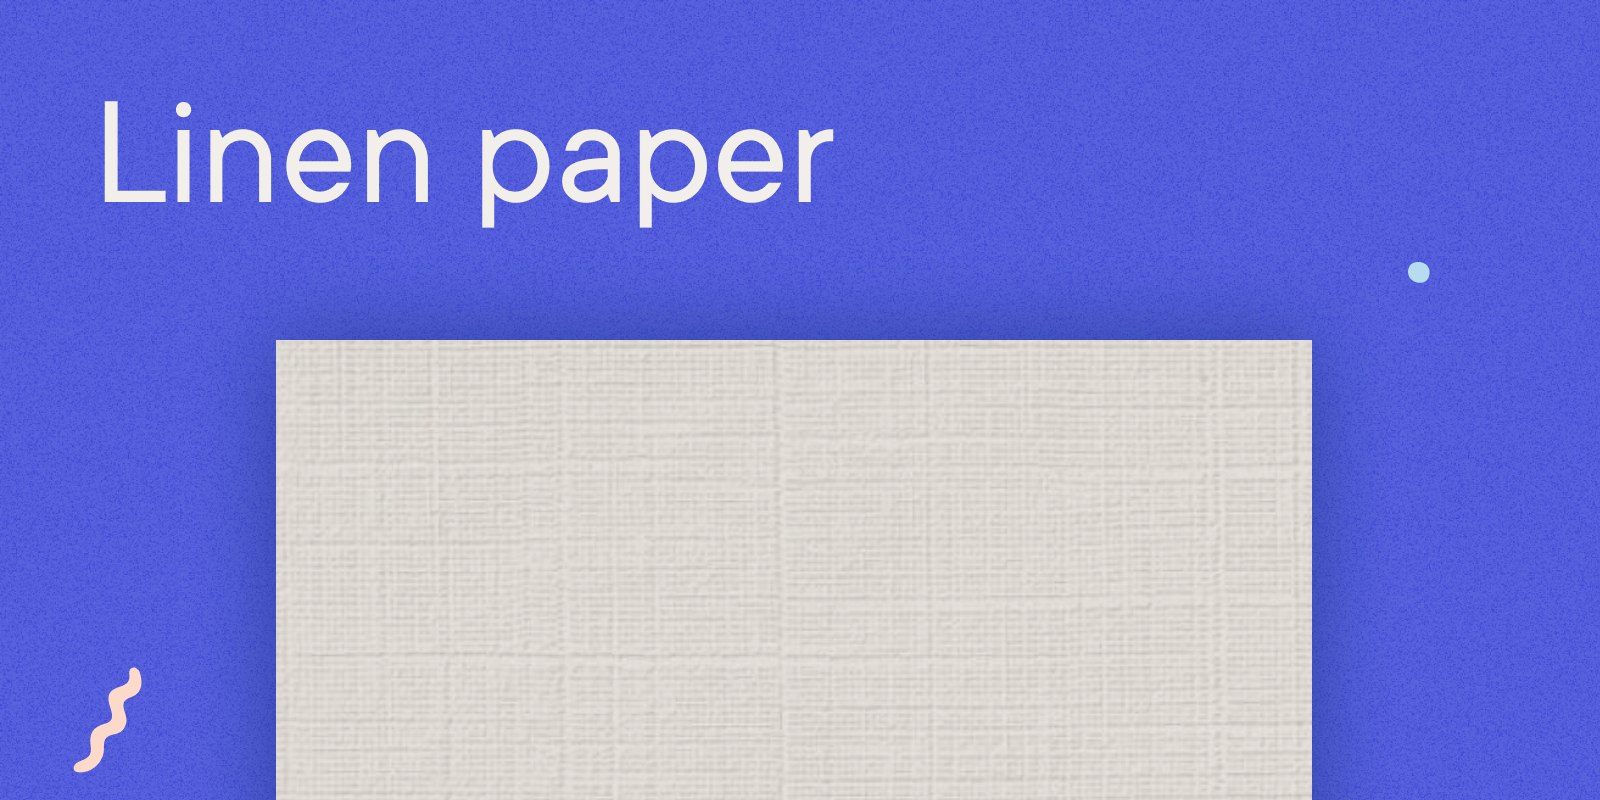 Blogs - Linen paper